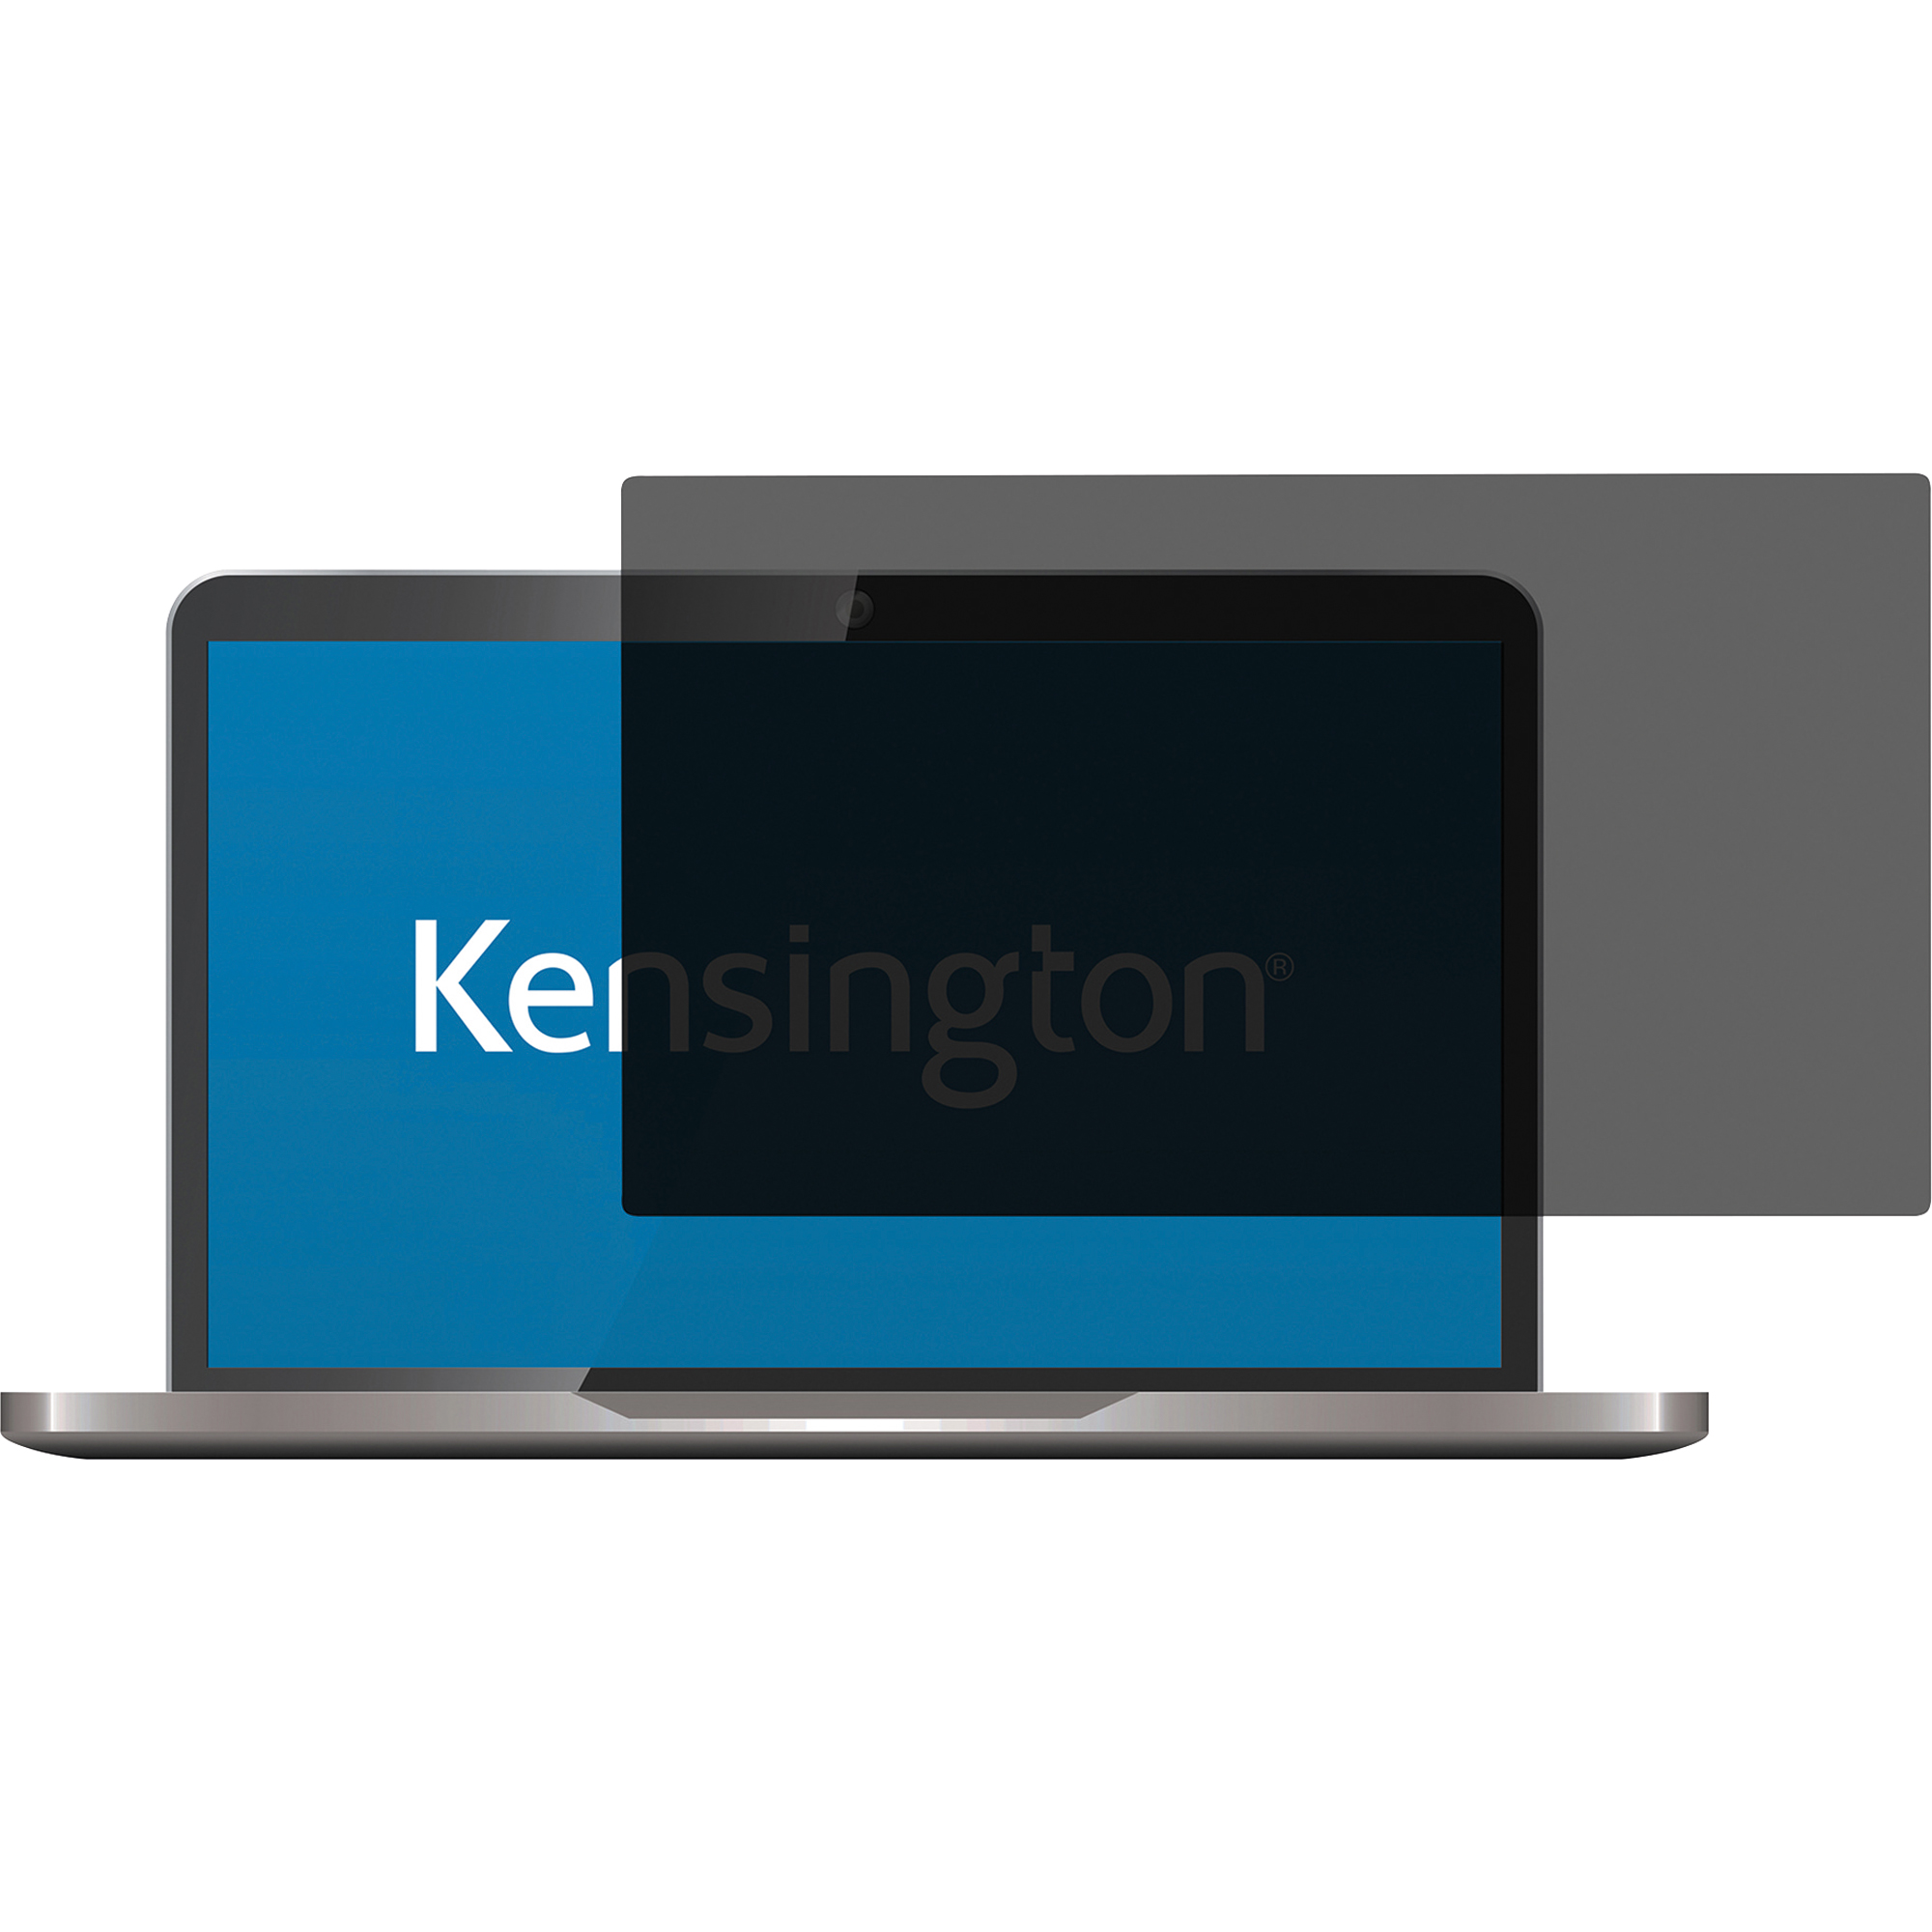 Kensington Bildschirmfilter für Laptops 13,3 Zoll